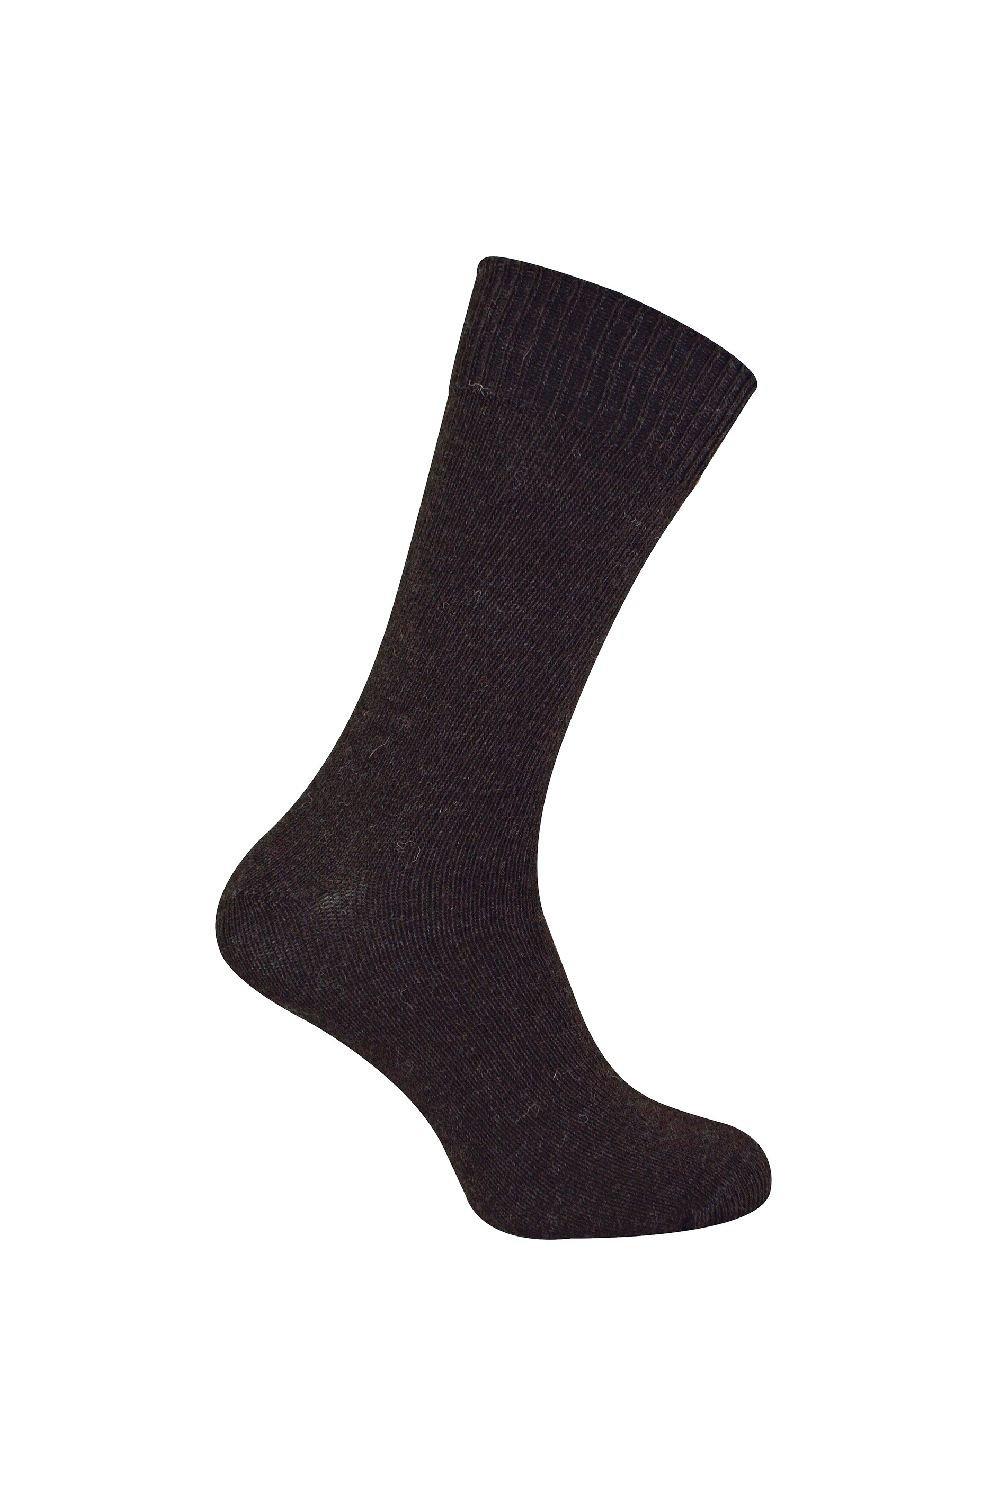 Thick Warm Lightweight Luxury Alpaca Wool Socks for Winter